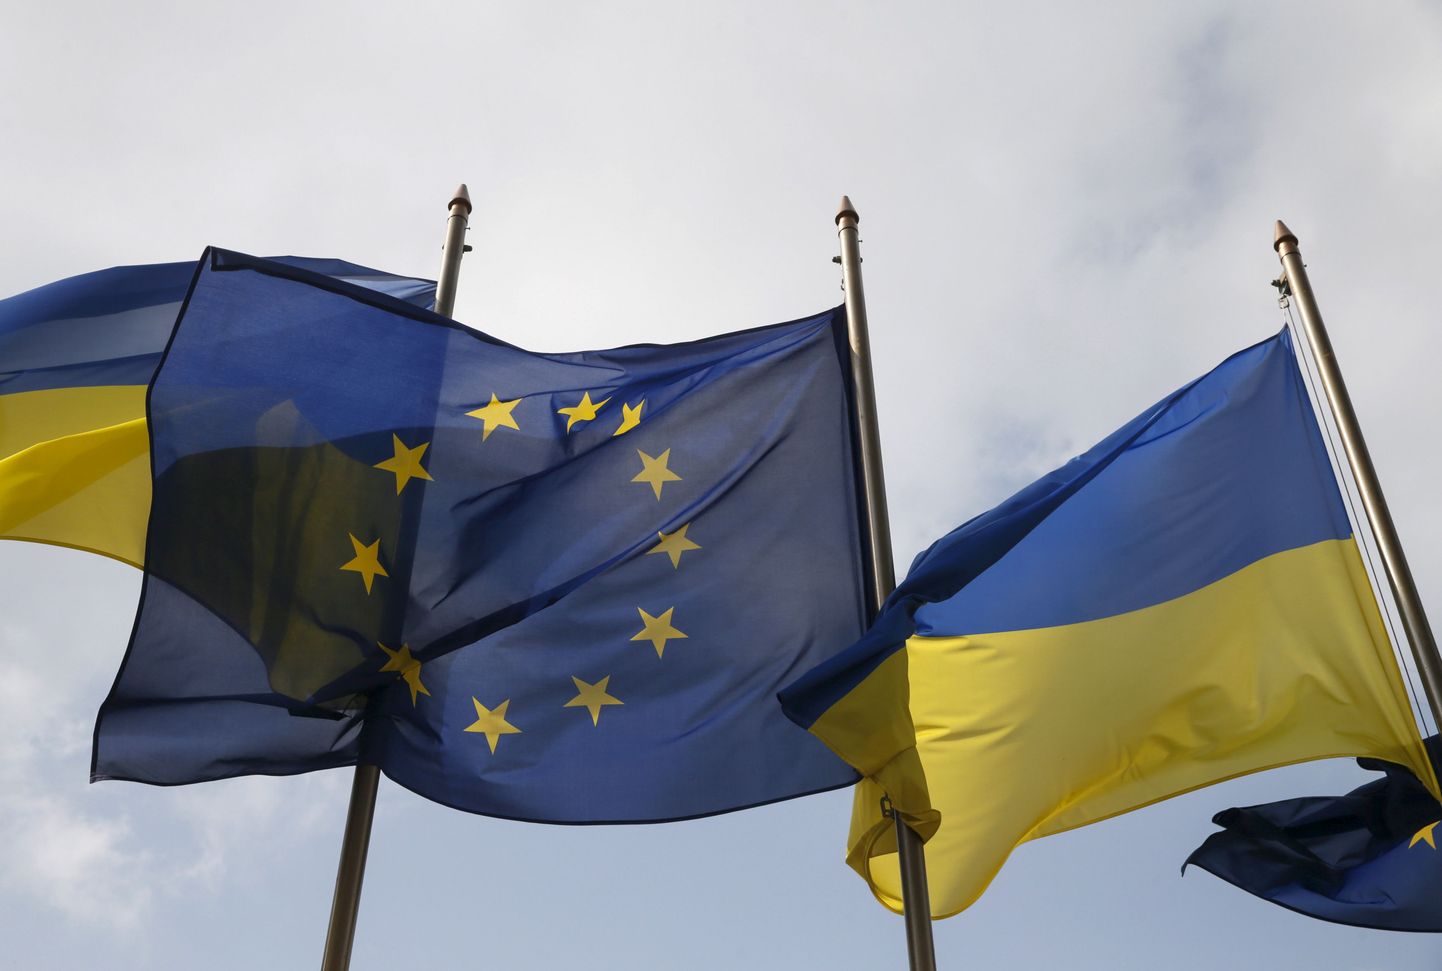 Ukrainian and EU flags fly in front of the Presidential Administration in Kiev, Ukraine, April 7, 2016. REUTERS/Valentyn Ogirenko